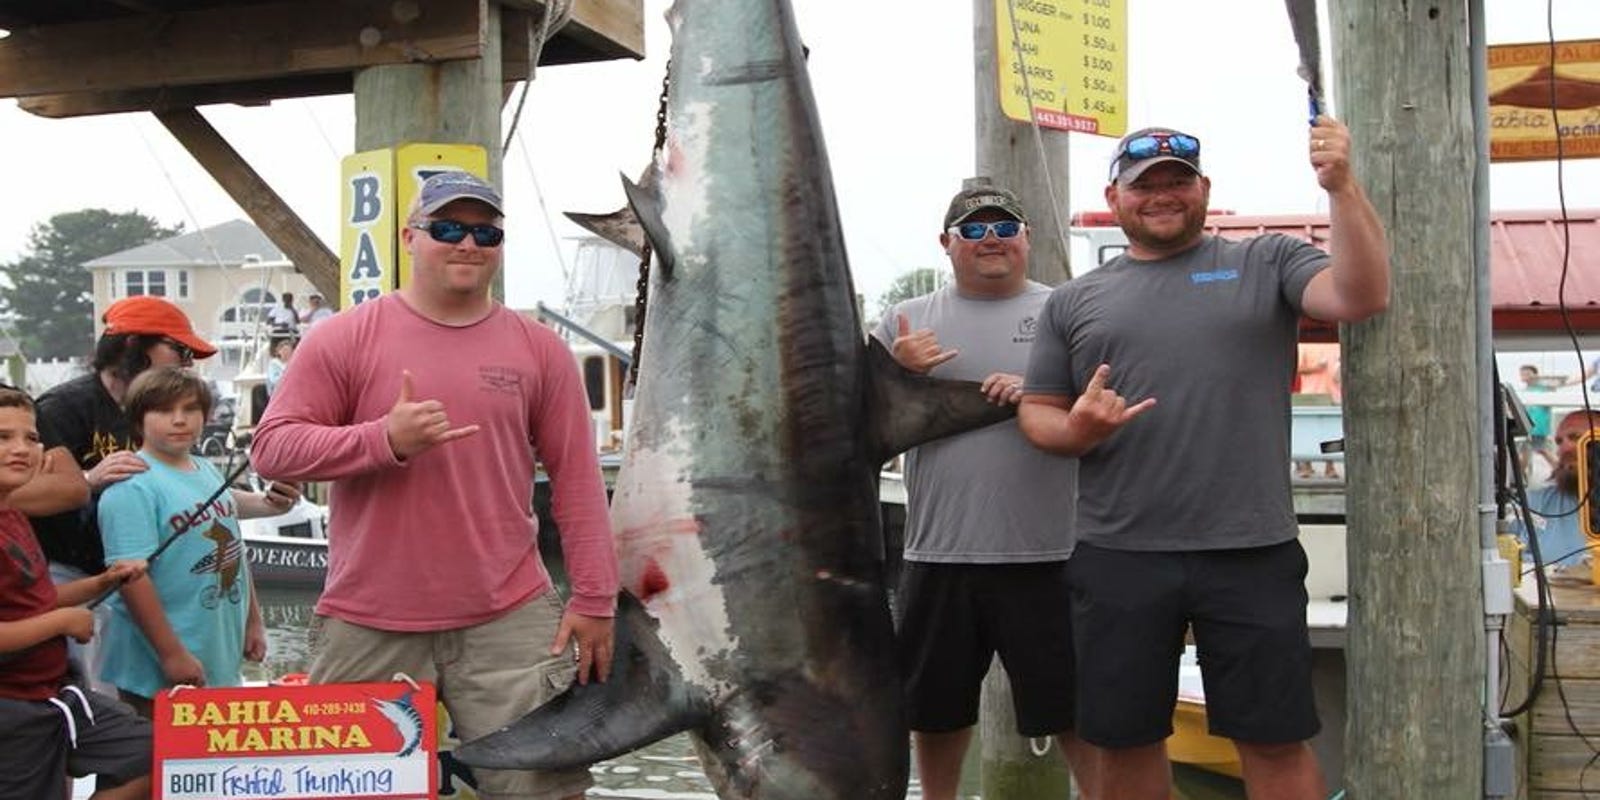 Massive shark caught at Ocean City tournament